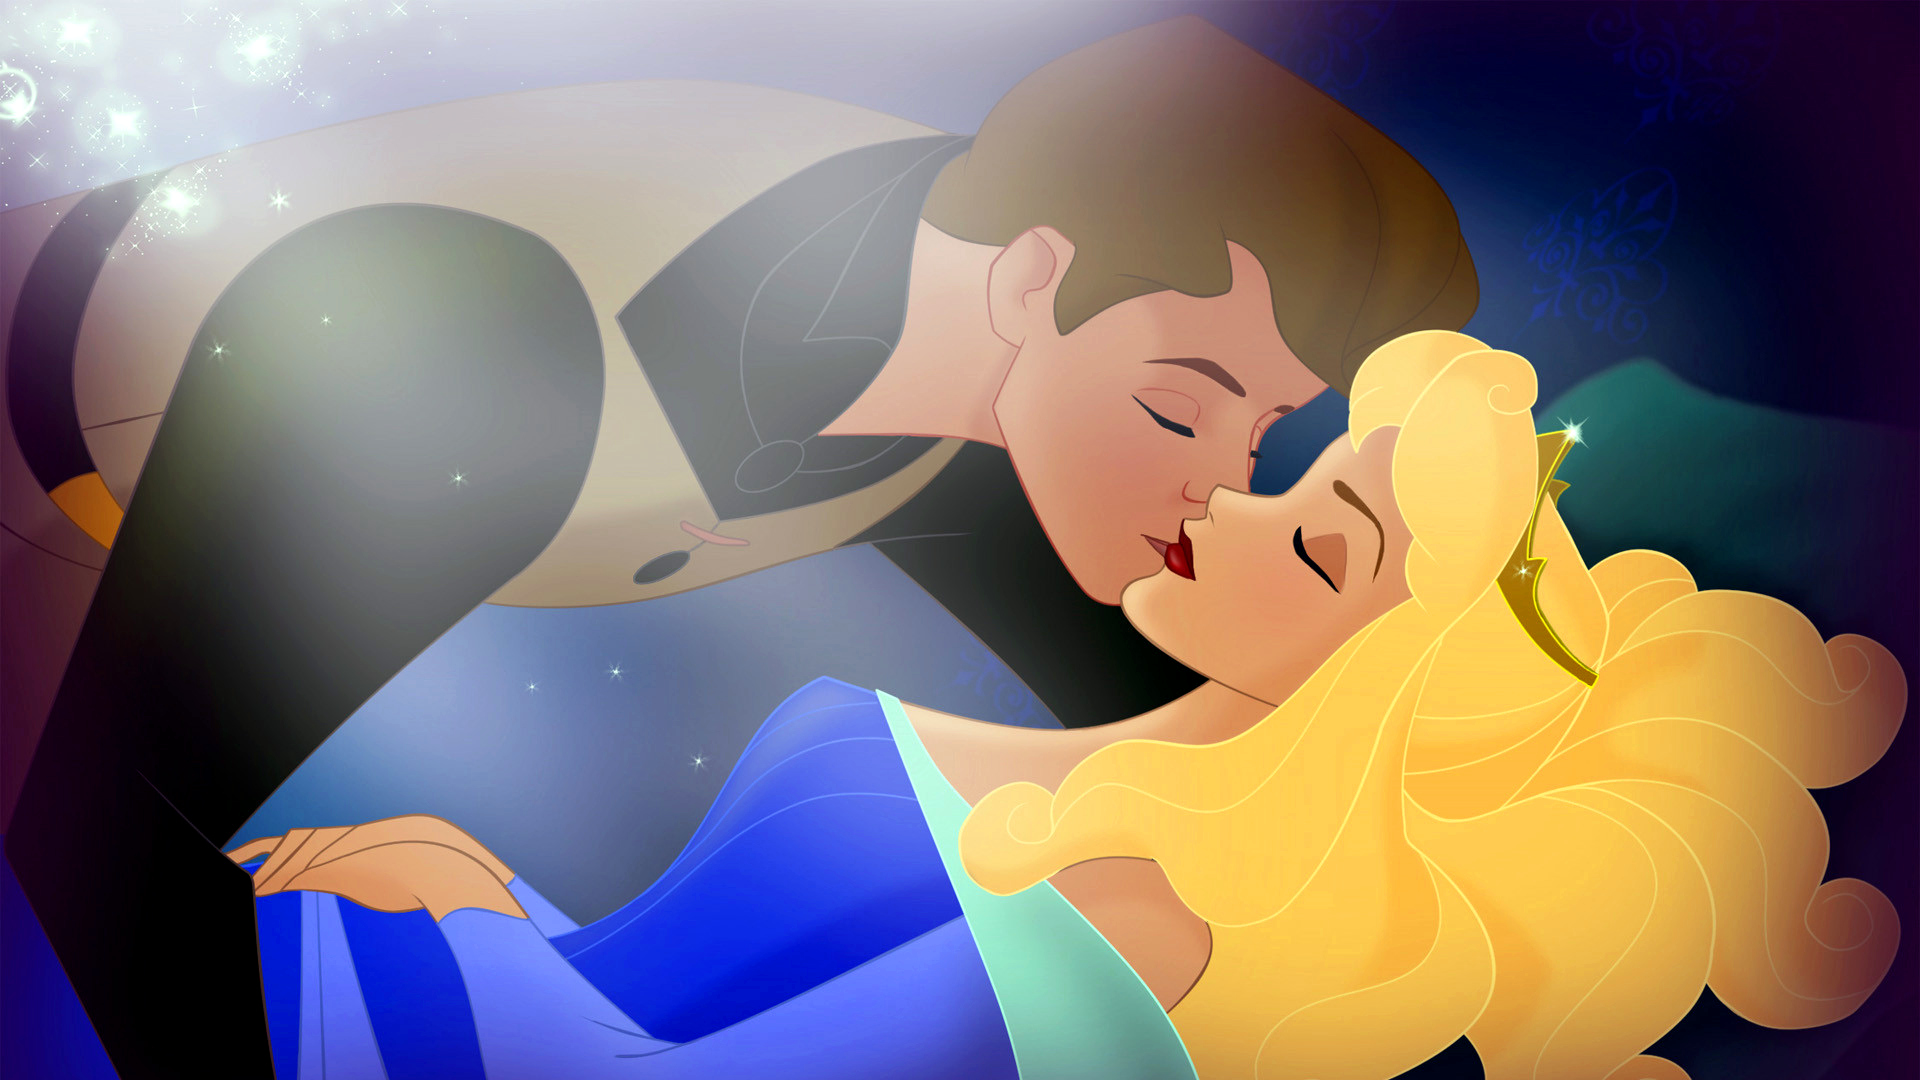 Movie Sleeping Beauty (1959) HD Wallpaper | Background Image